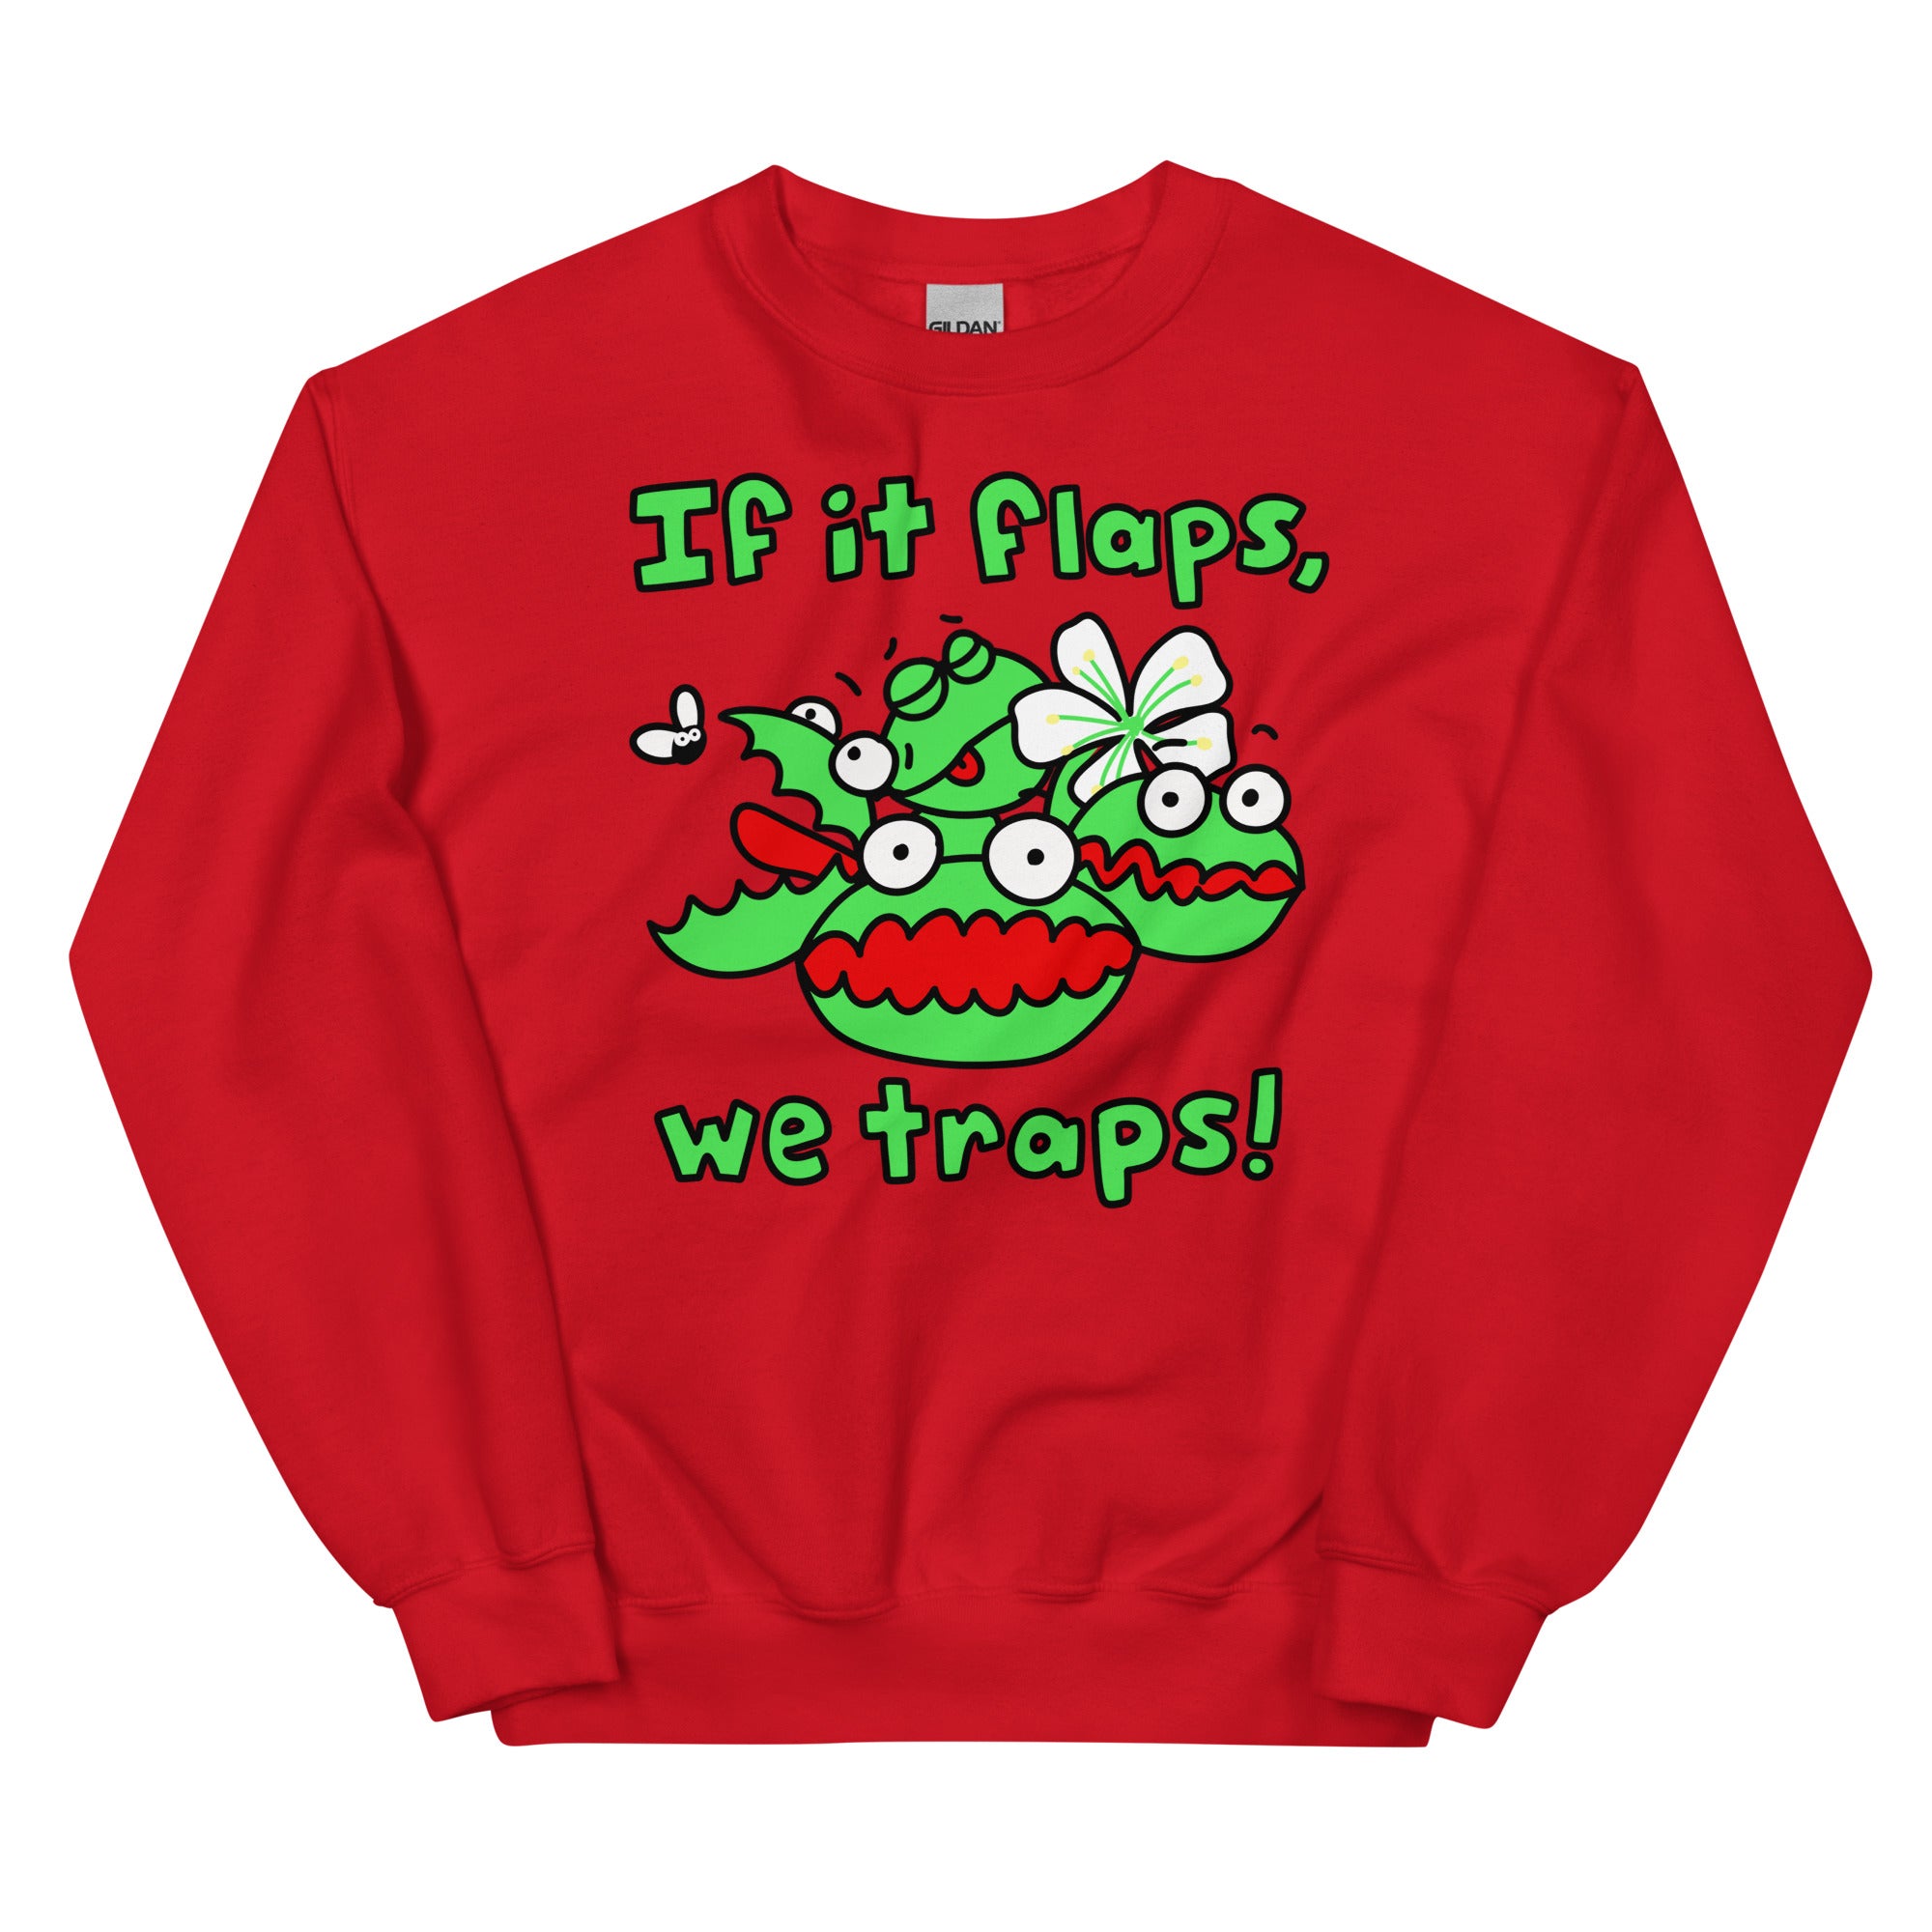 Venus Flytrap sweatshirt for wetlands biologist gift funny weird plant shirt for men women graphic shirt biology nerd tee Botanist fly trap